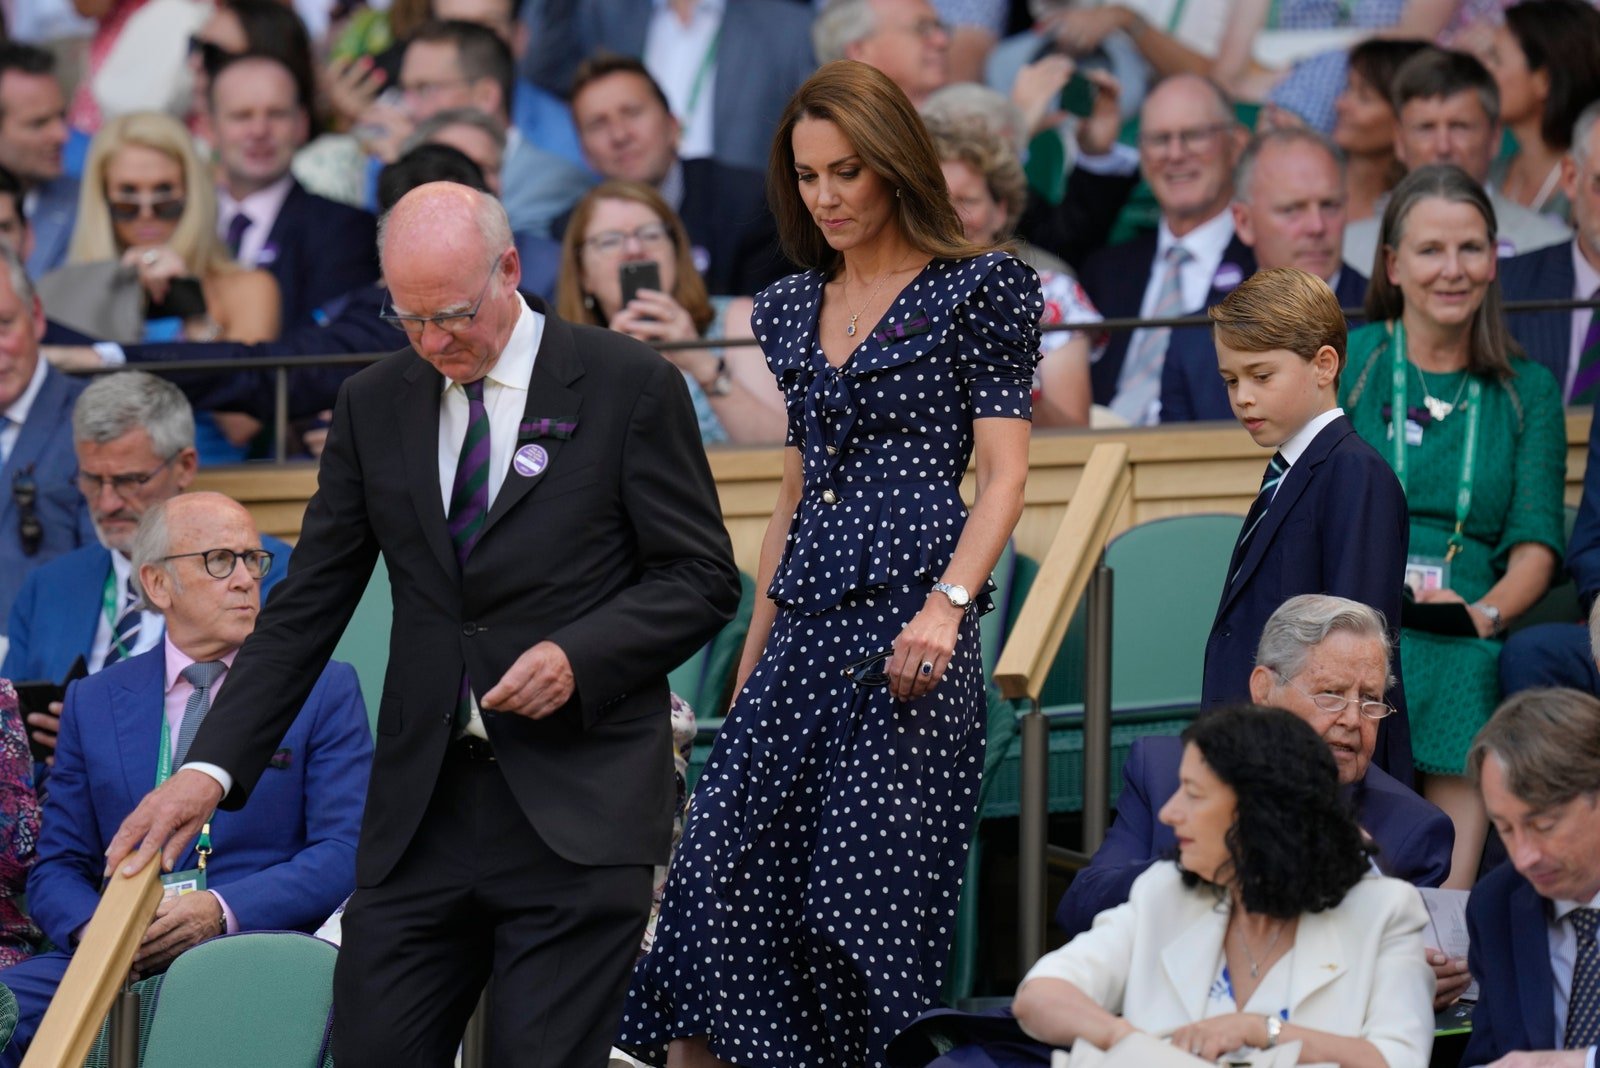 The Duke and Duchess of Cambridge Attend Gentlemen's Singles Final ...